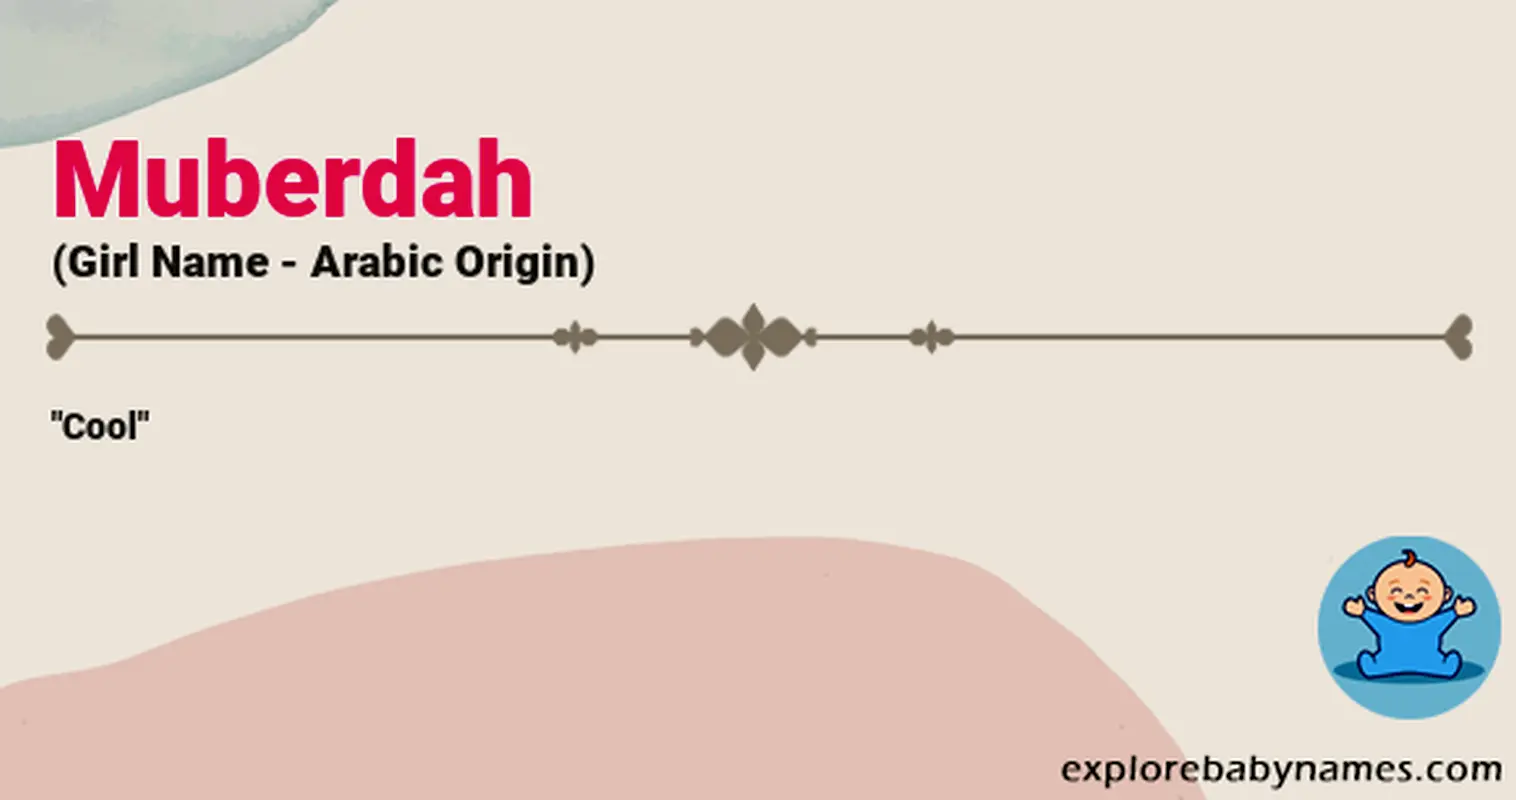 Meaning of Muberdah